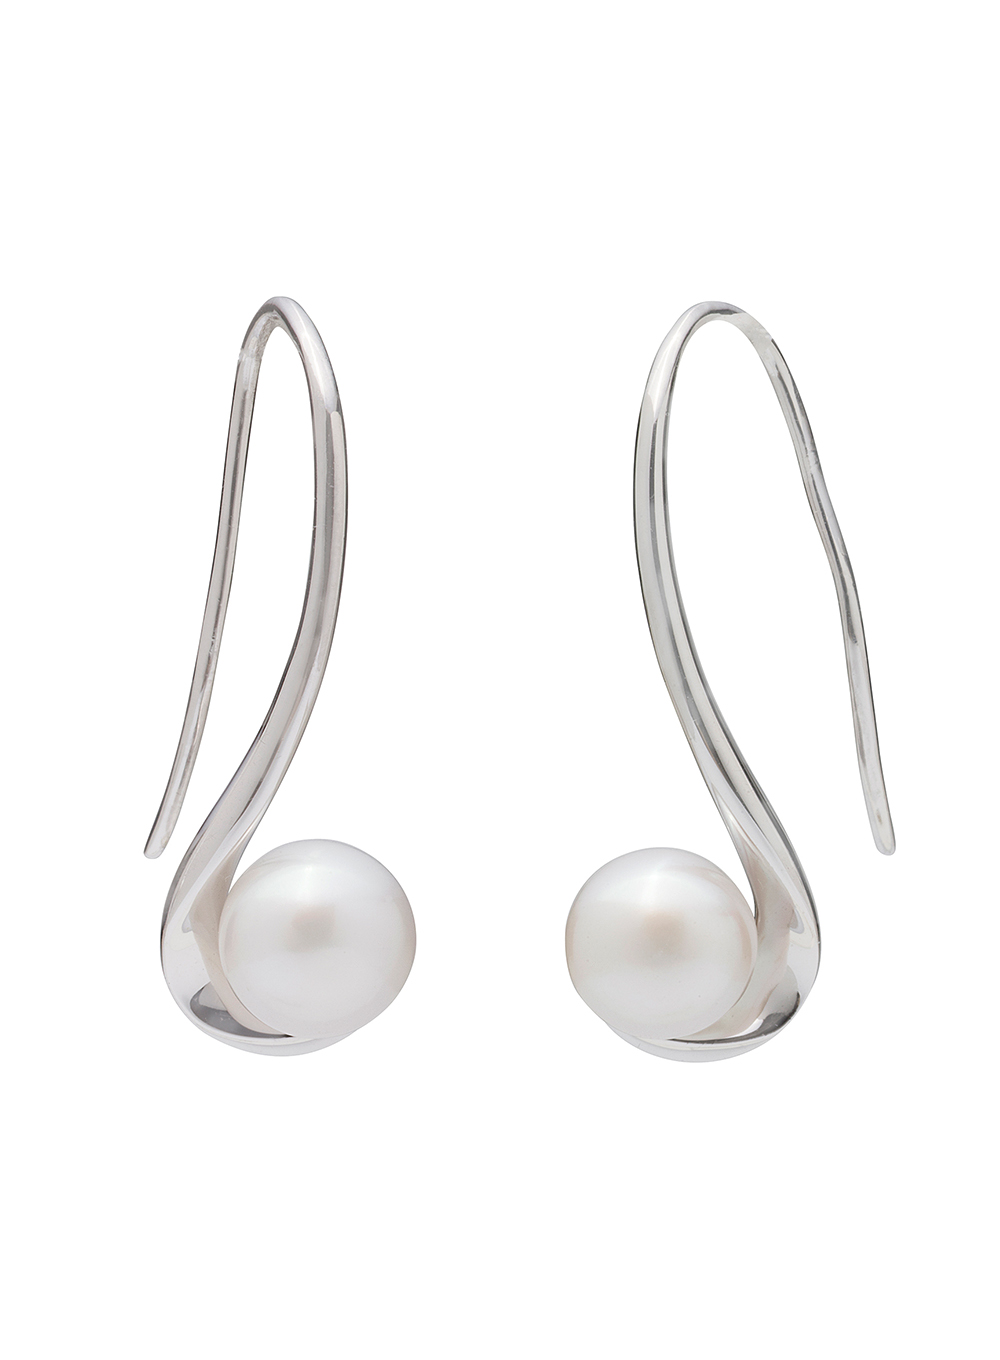 Sterling Silver Long Hook Earrings with Freshwater Pearls